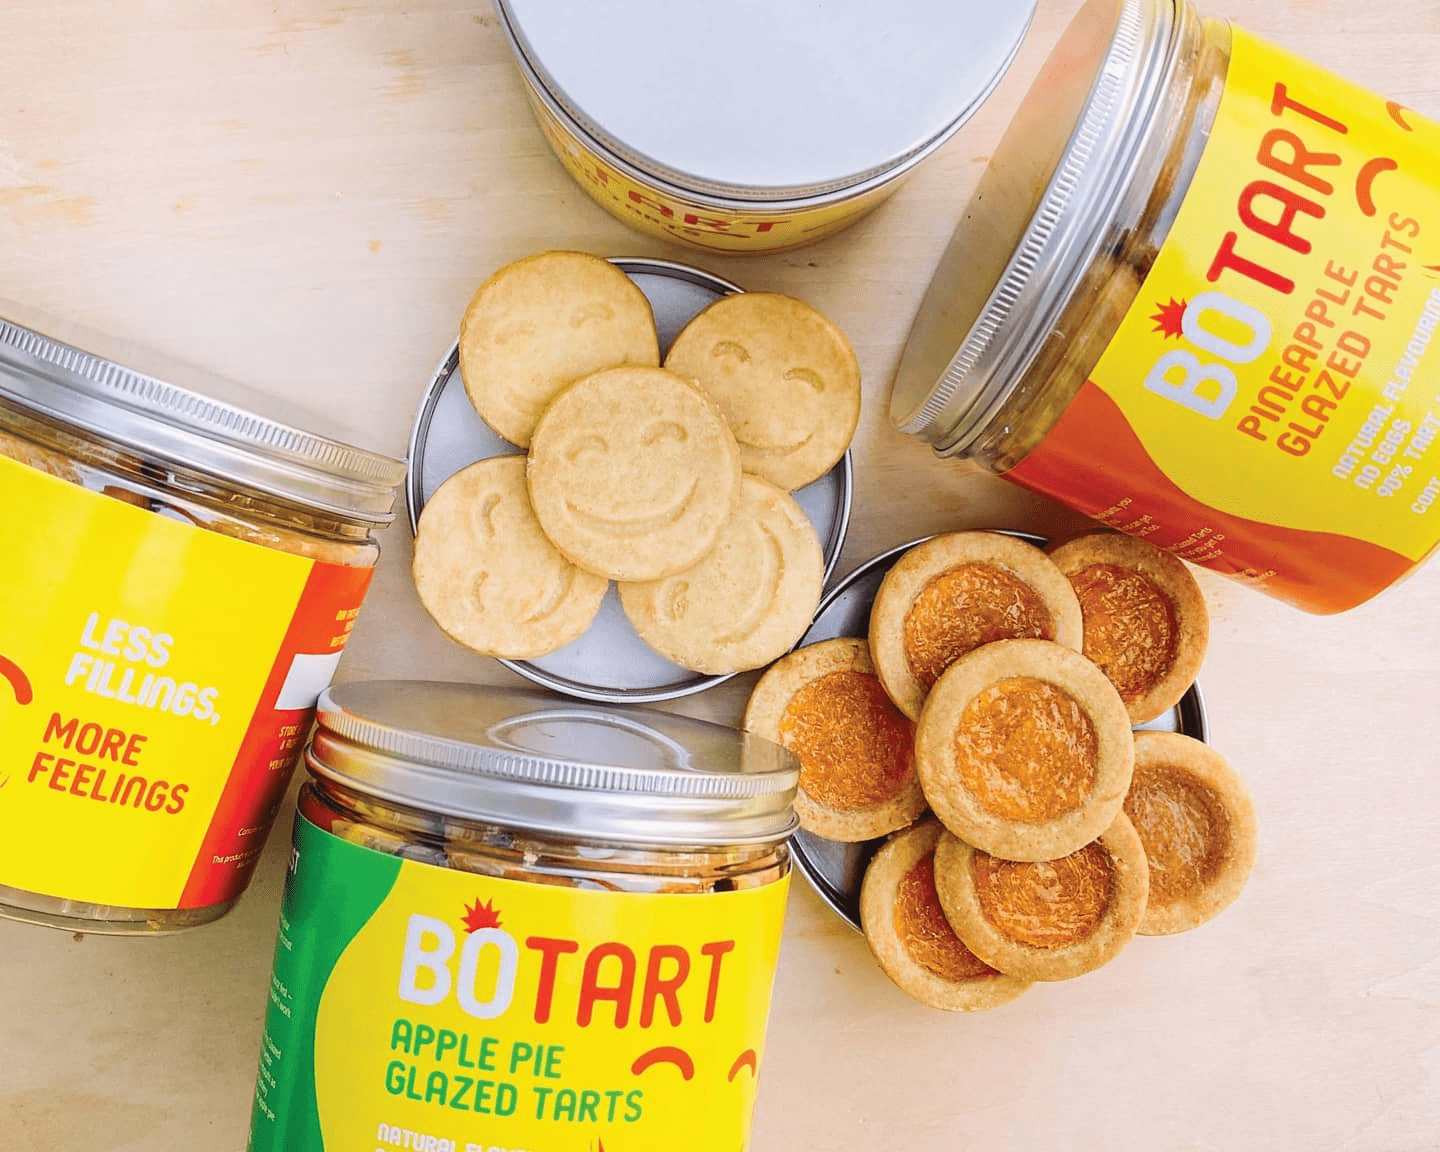 Online Bakeries To Get Unique Homemade CNY Goodies - BoTart apple pie glazed tarts